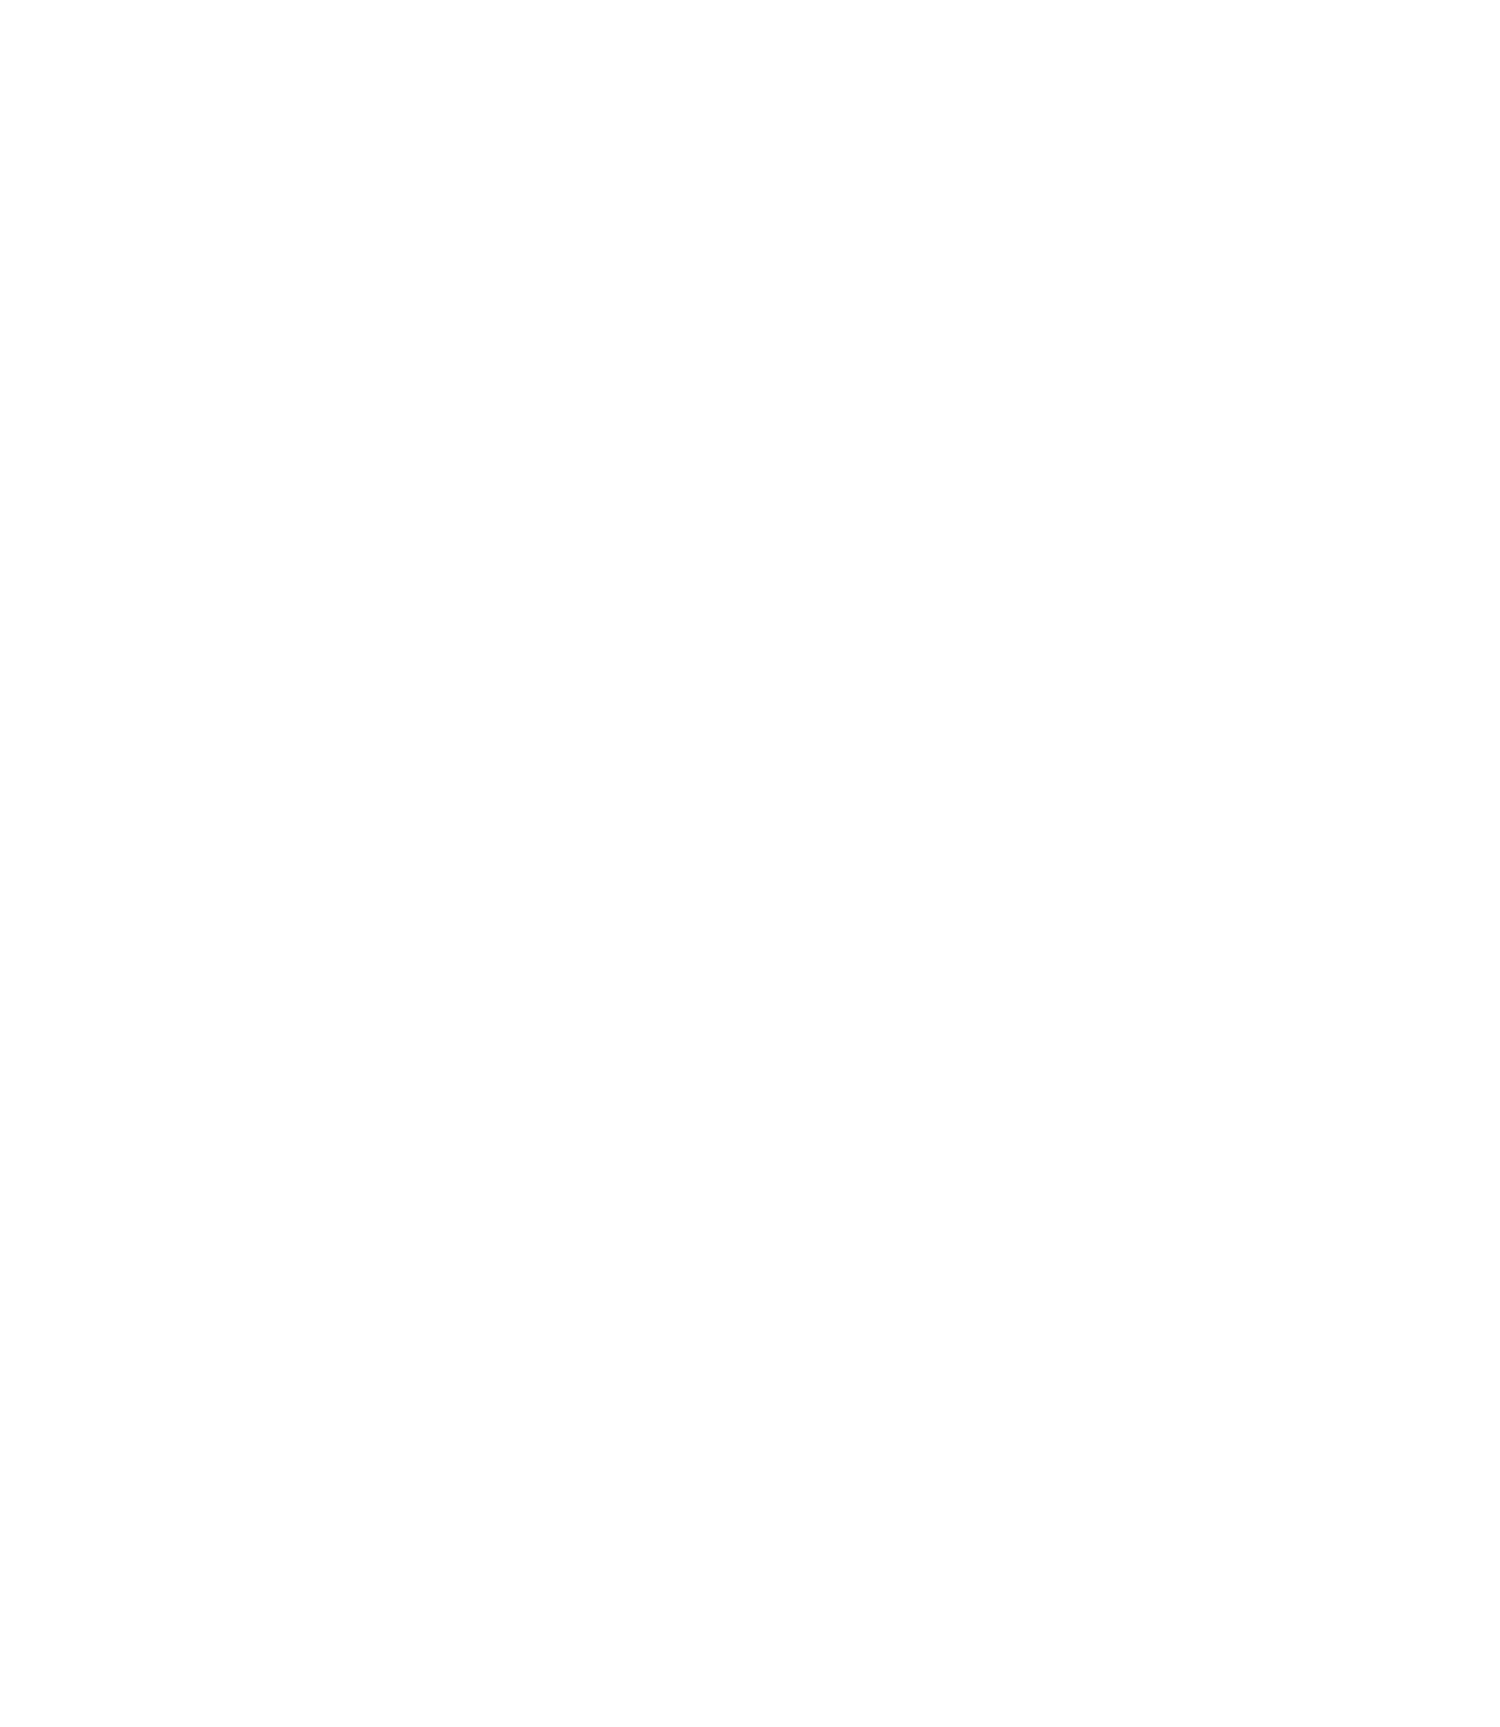 Reno Christian Fellowship